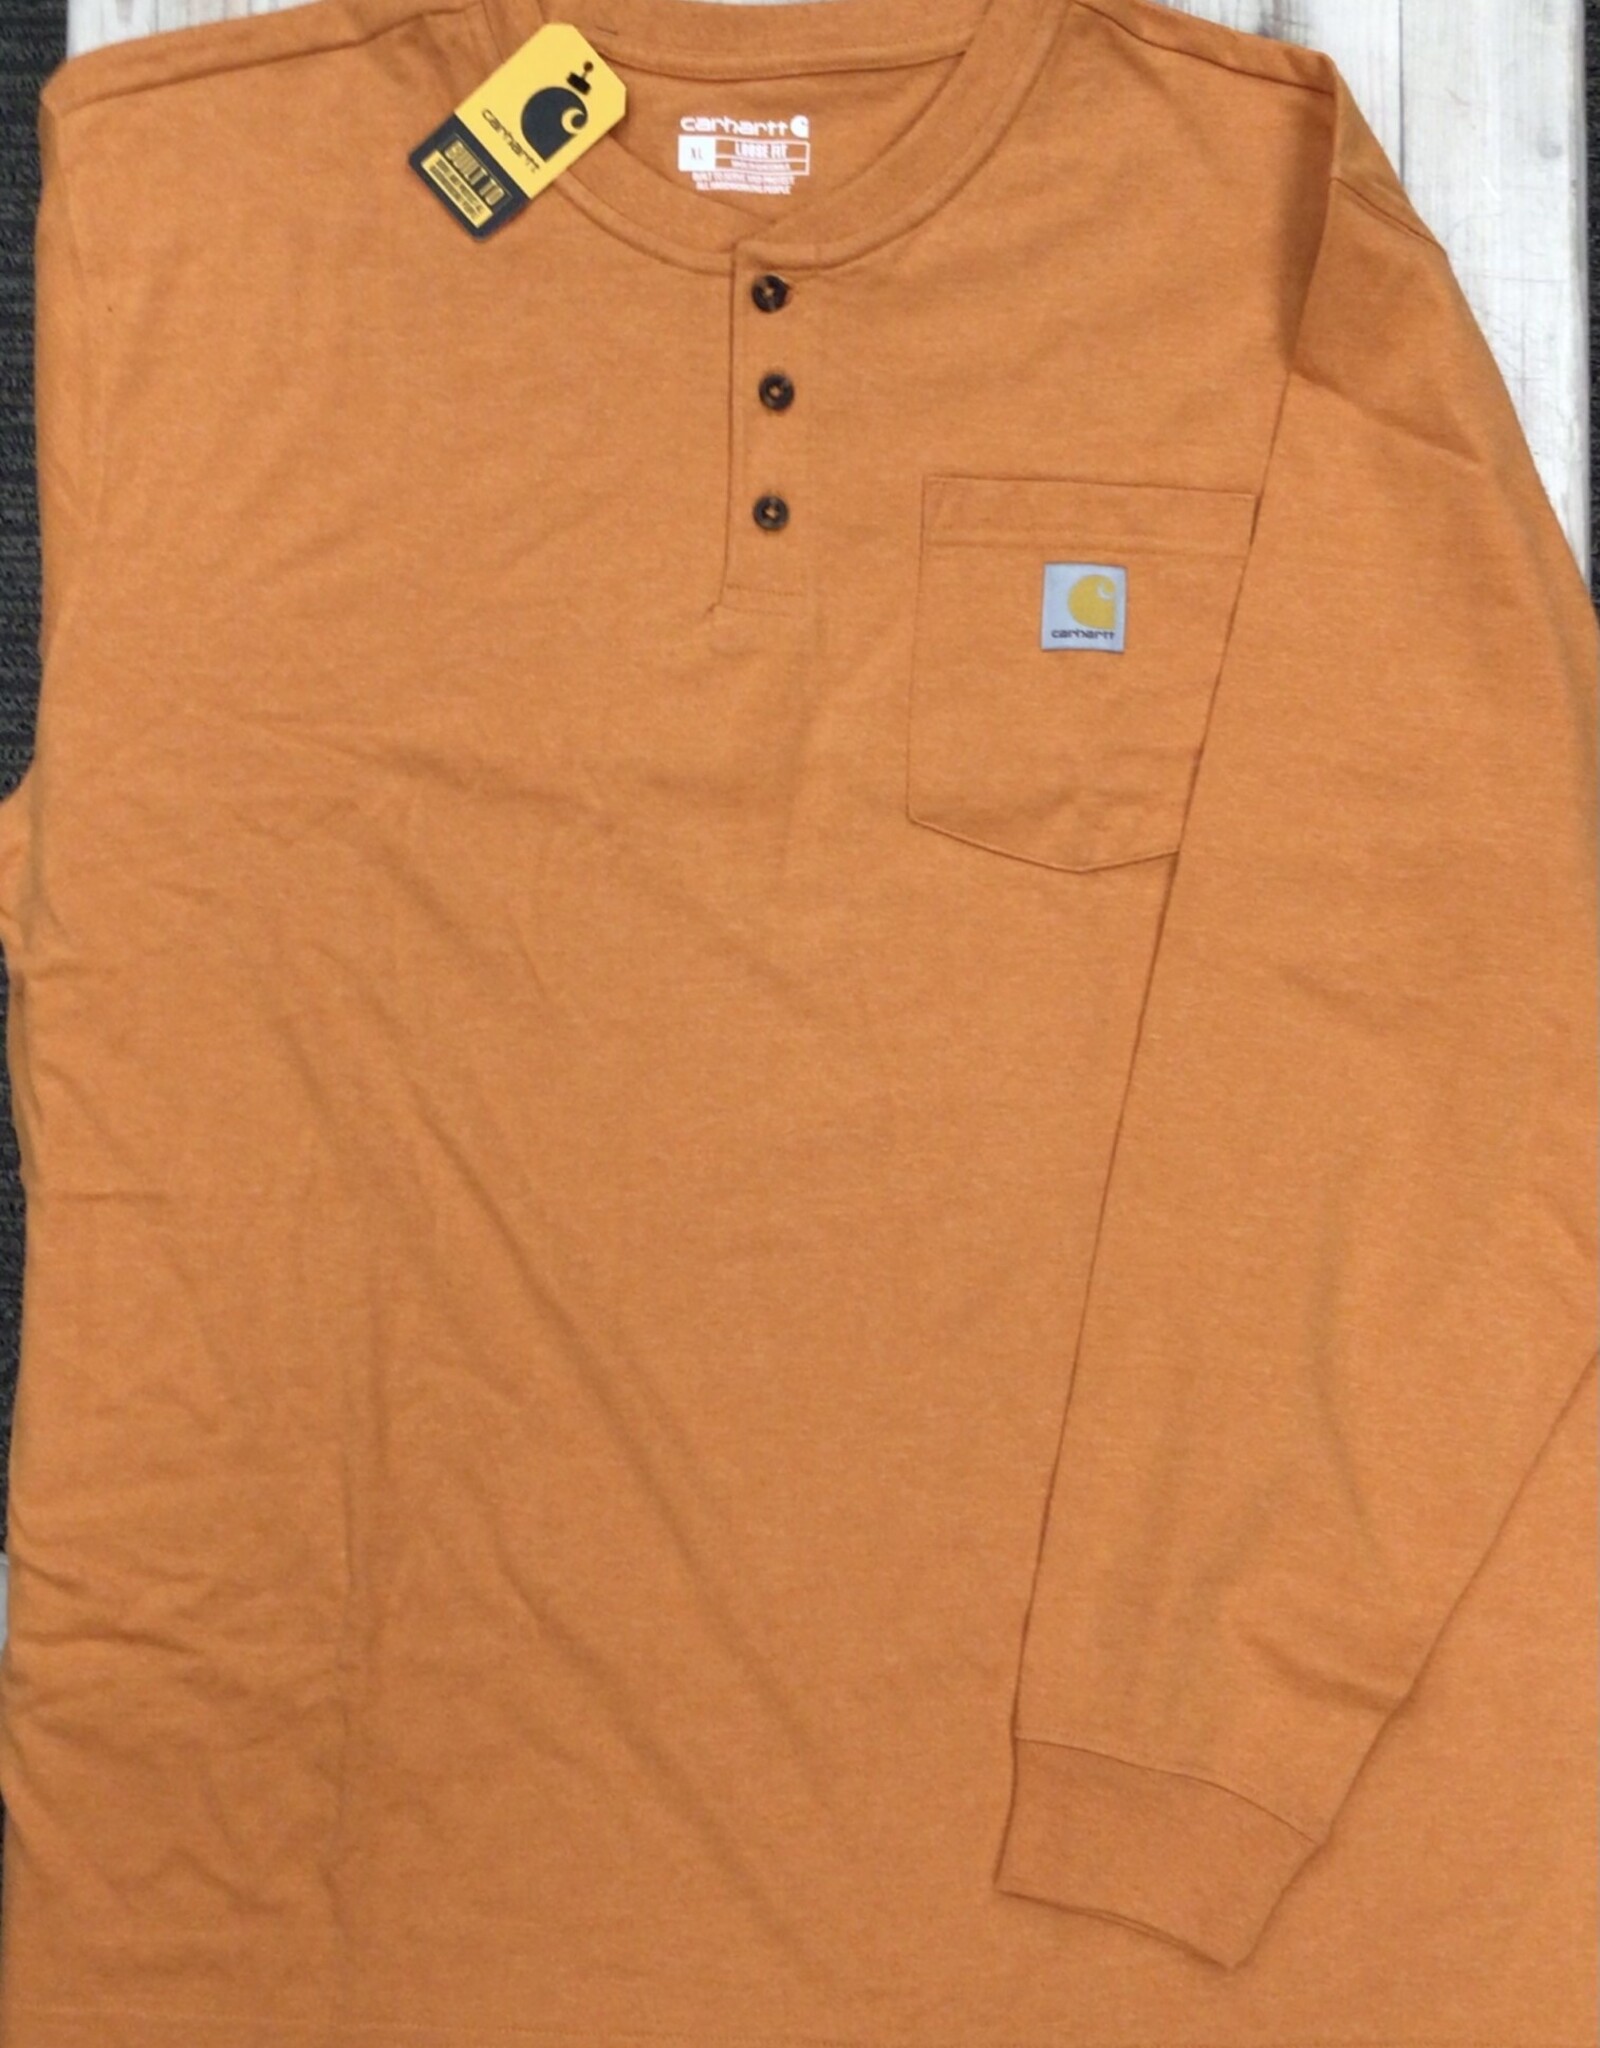 Carhartt K128 Long-Sleeve Workwear Pocket Henley Shirt at Tractor